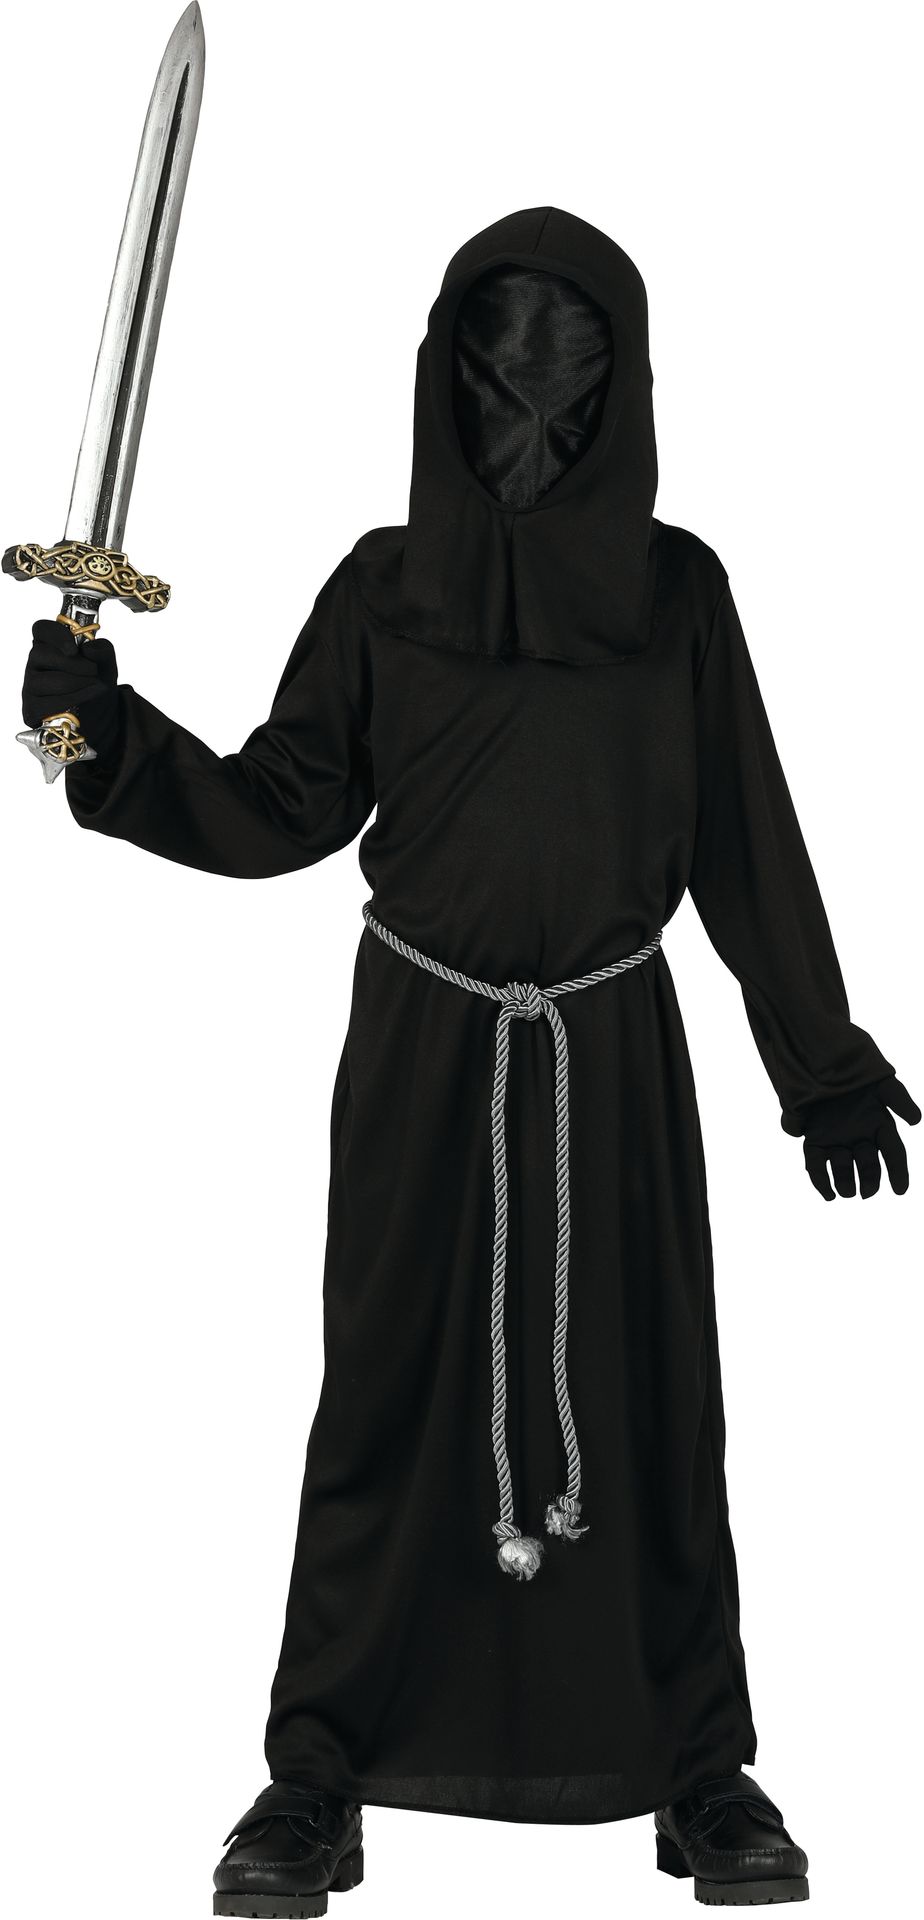 Lord of the Rings Darkness kostuum